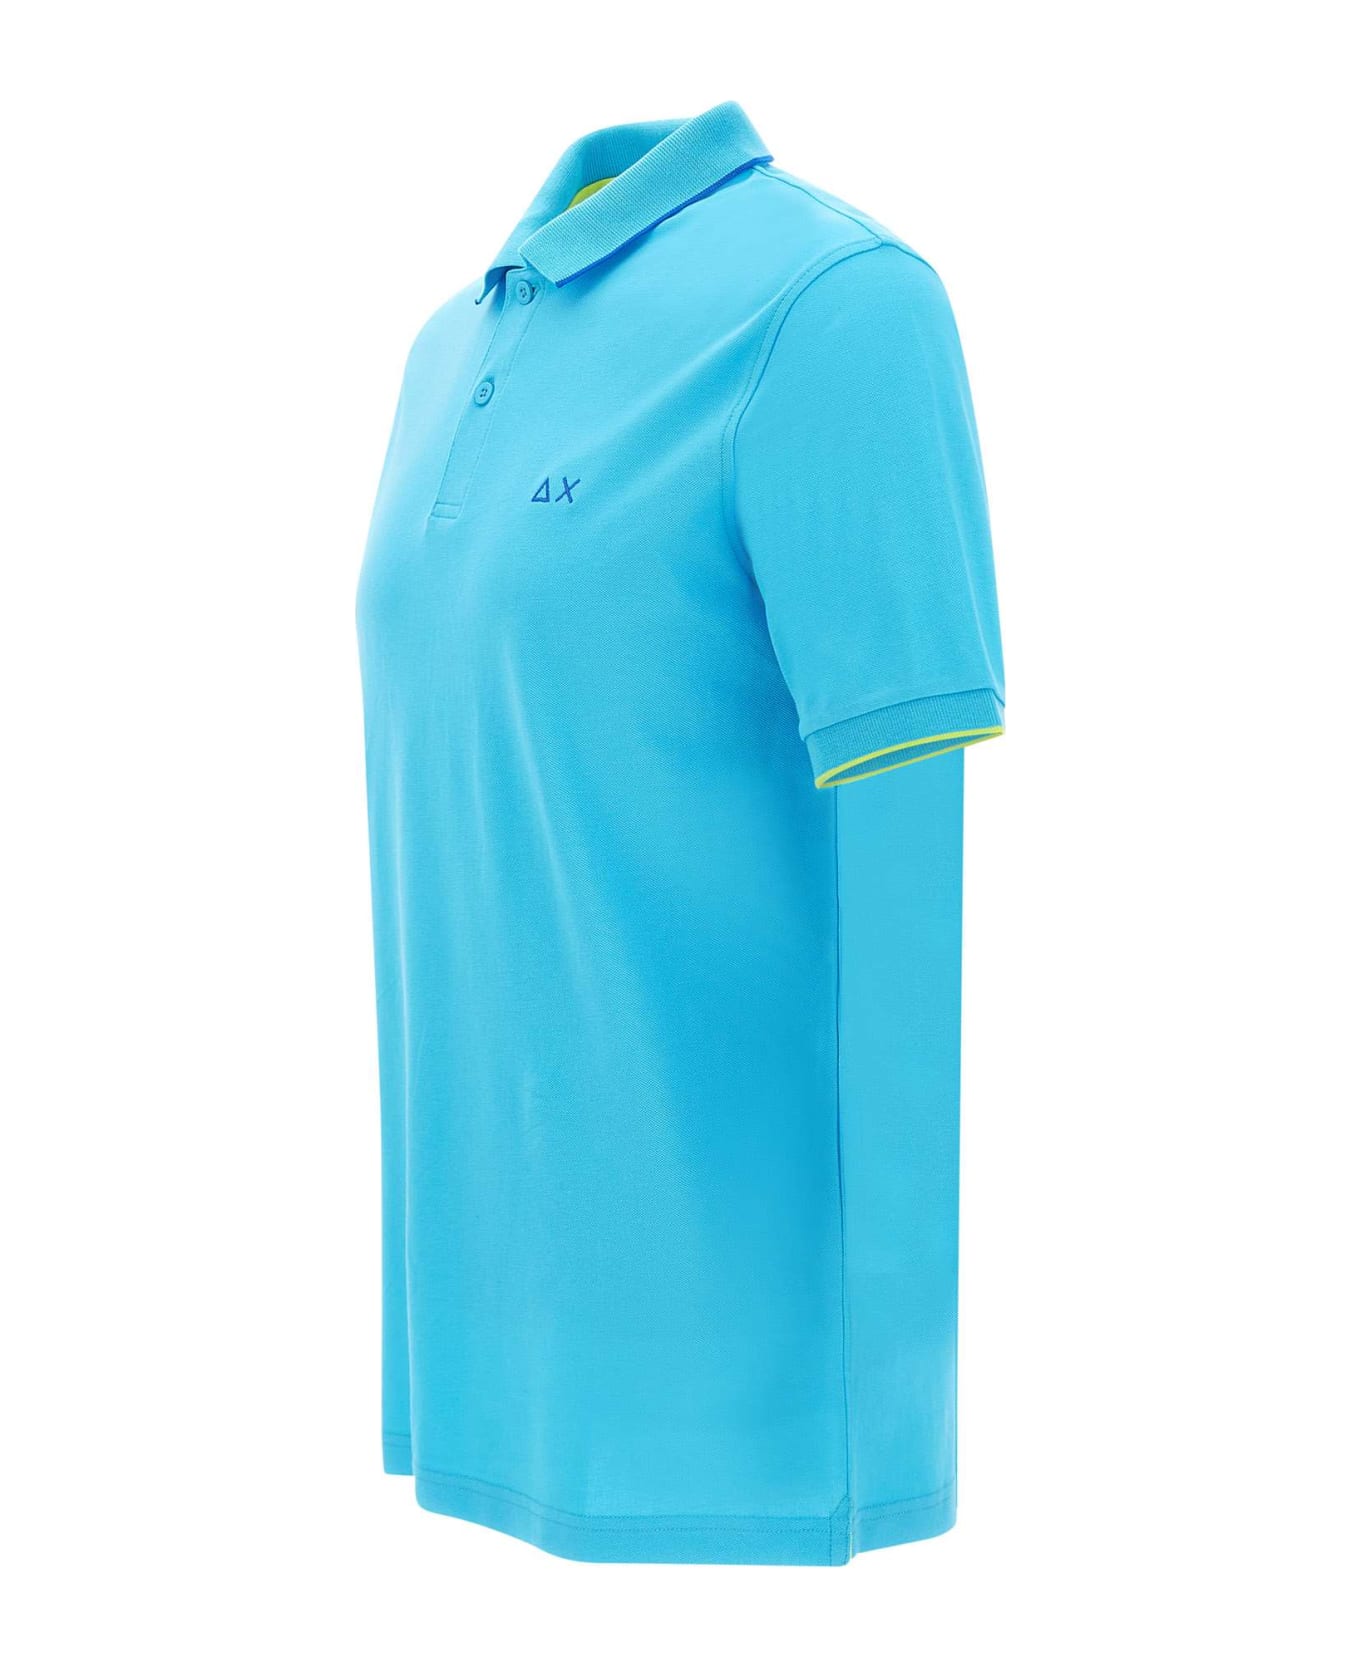 Sun 68 "small Stripe" Polo Shirt Cotton - LIGHT BLUE